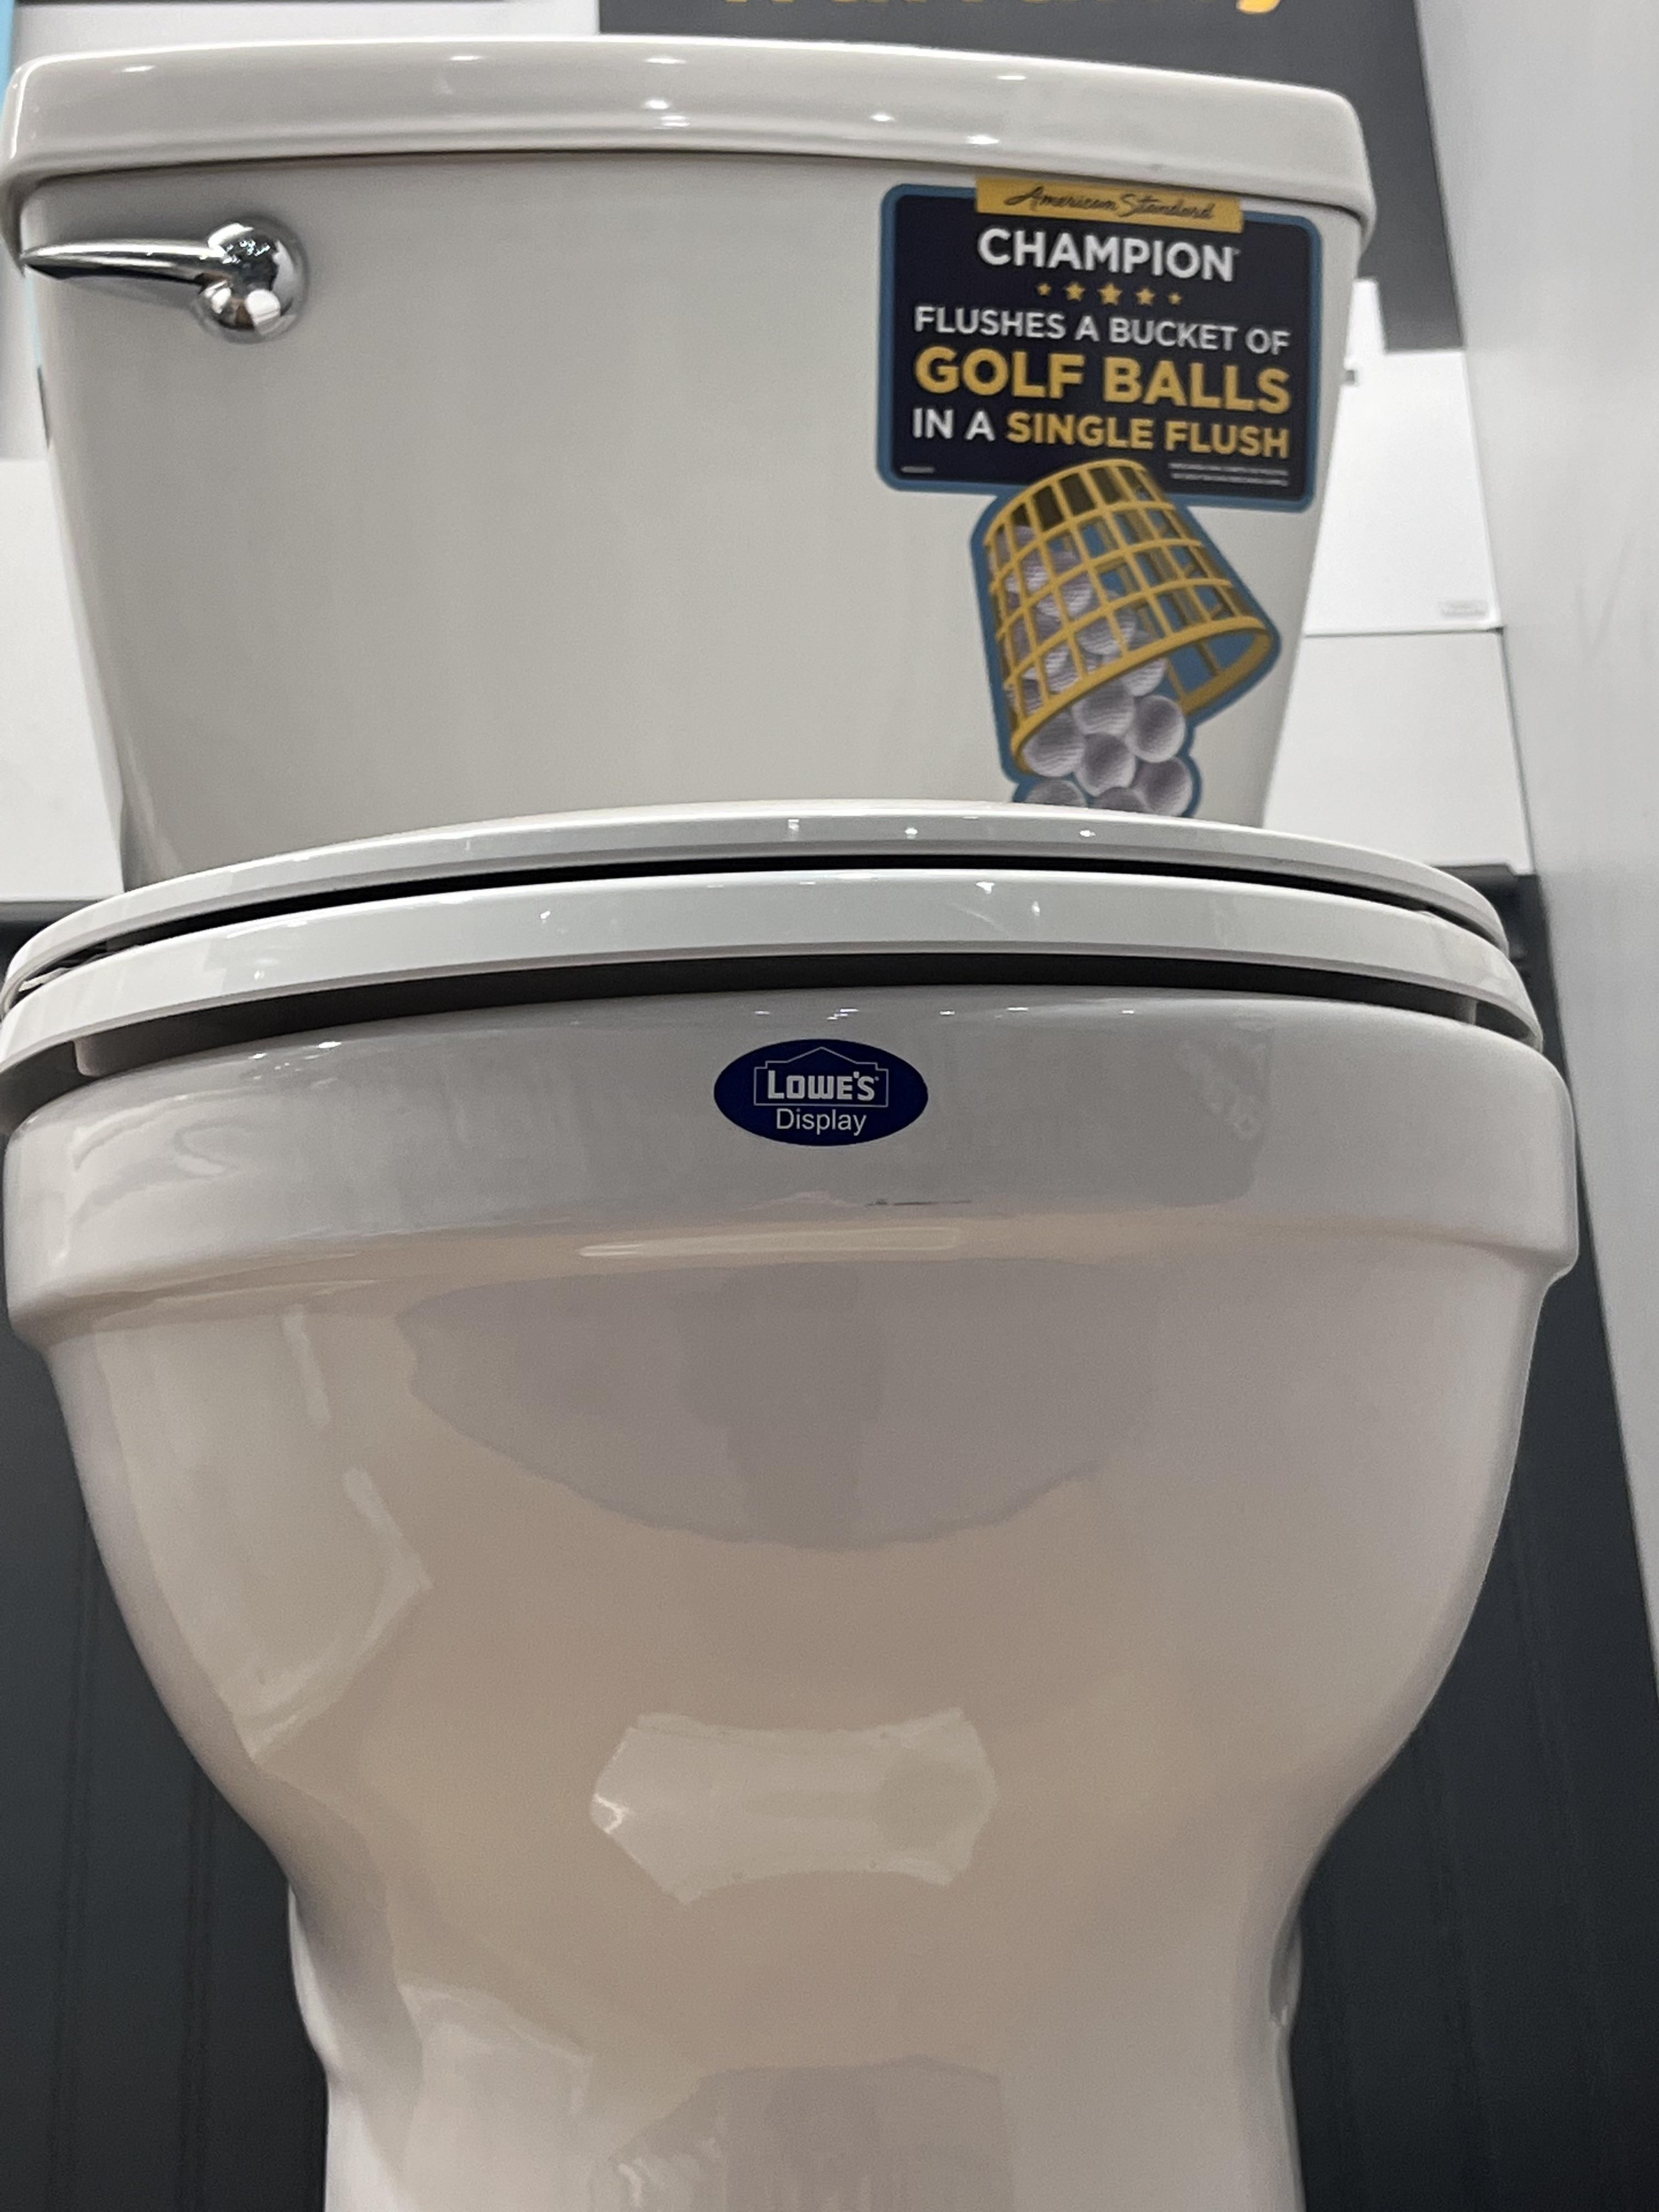 Who flushes golf balls?